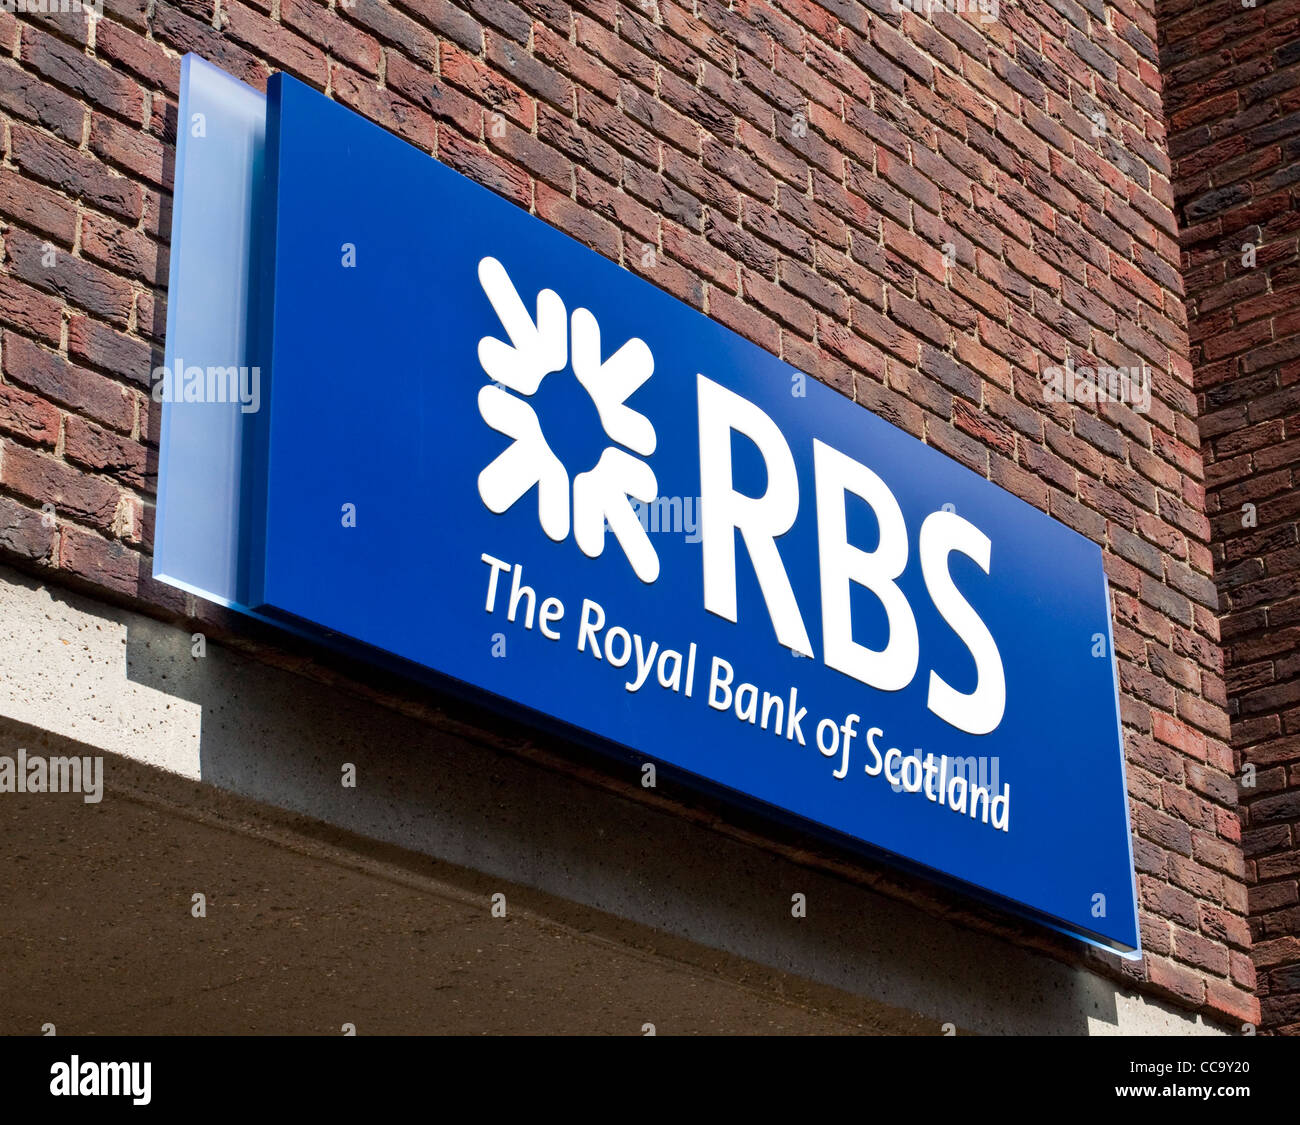 RBS The Royal Bank of Scotland branch sign Stock Photo